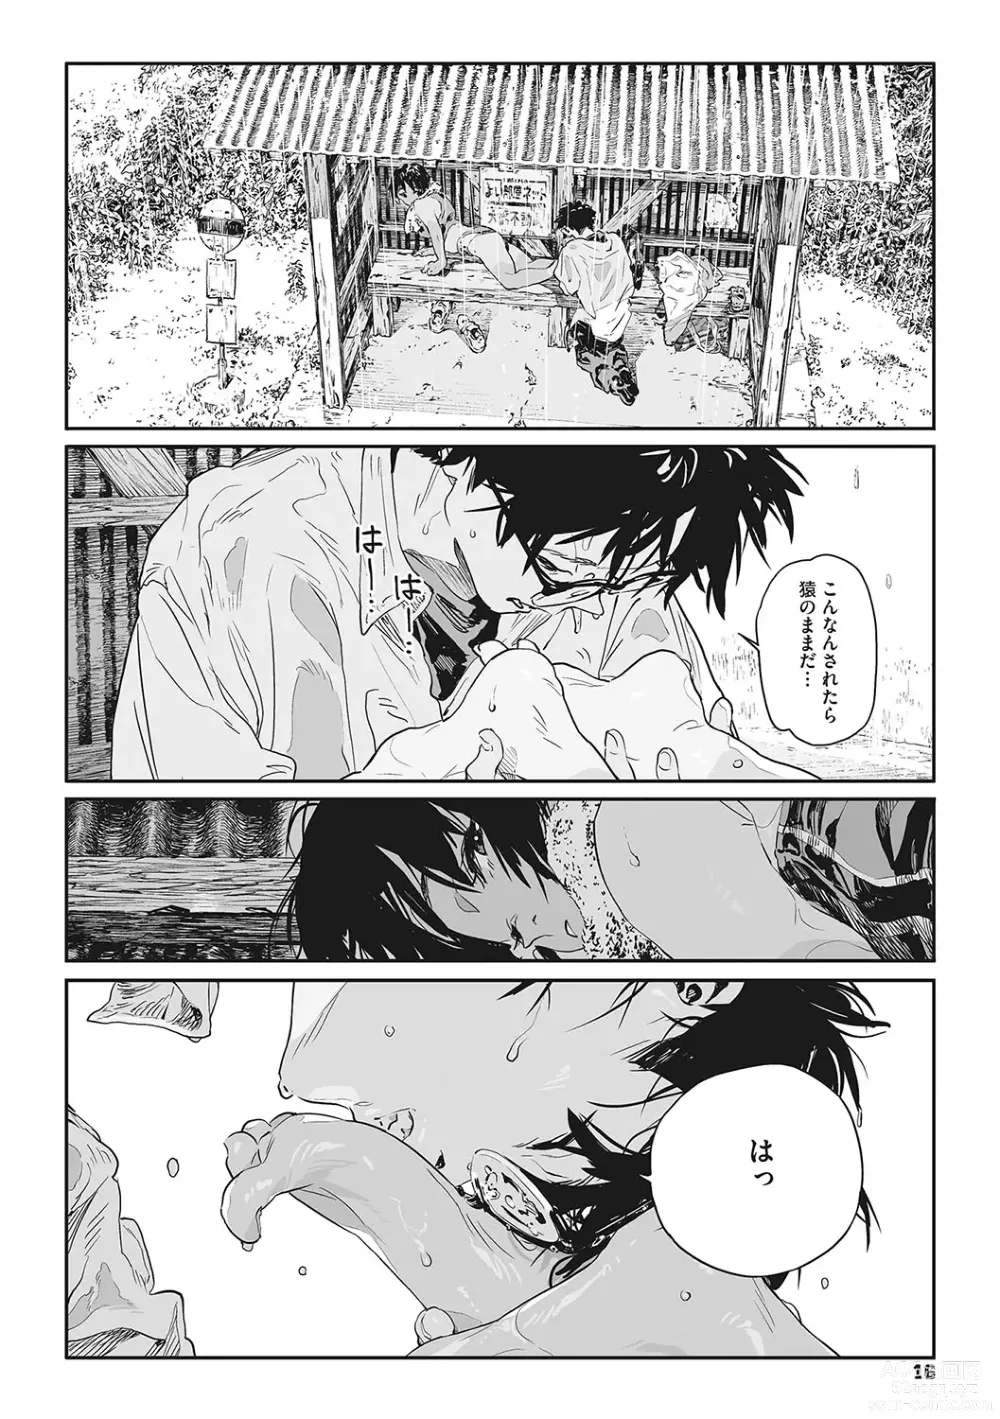 Page 15 of manga Ito o Yoru